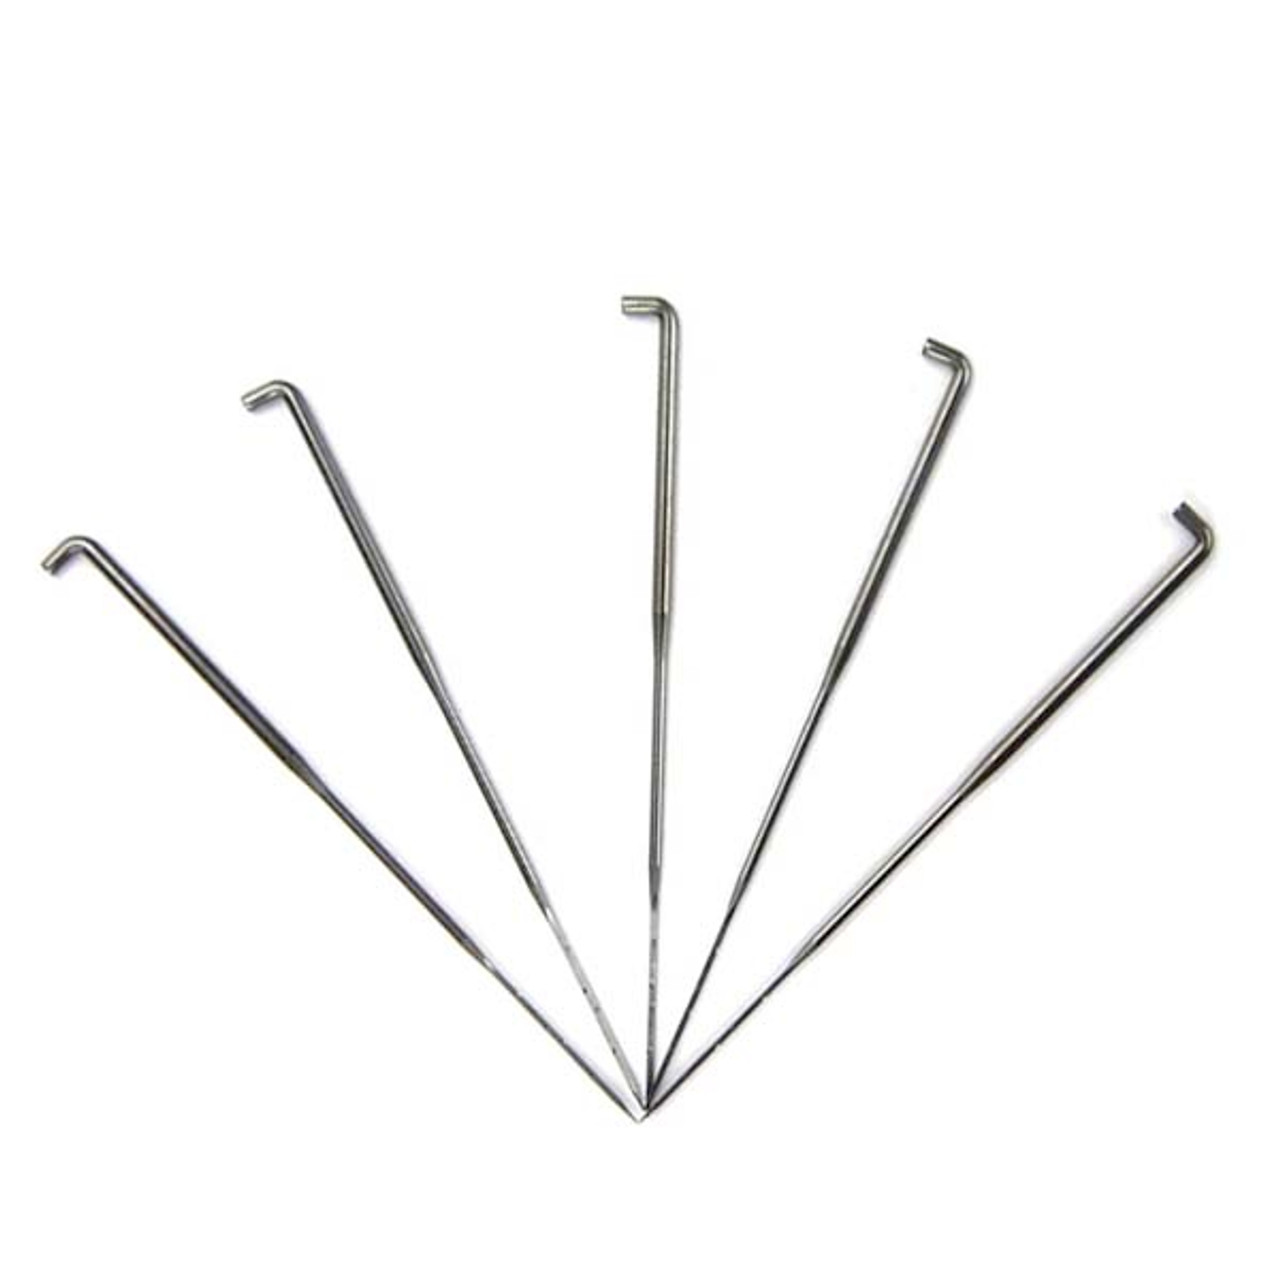 Needle felting for beginners - Using a reverse felting needle